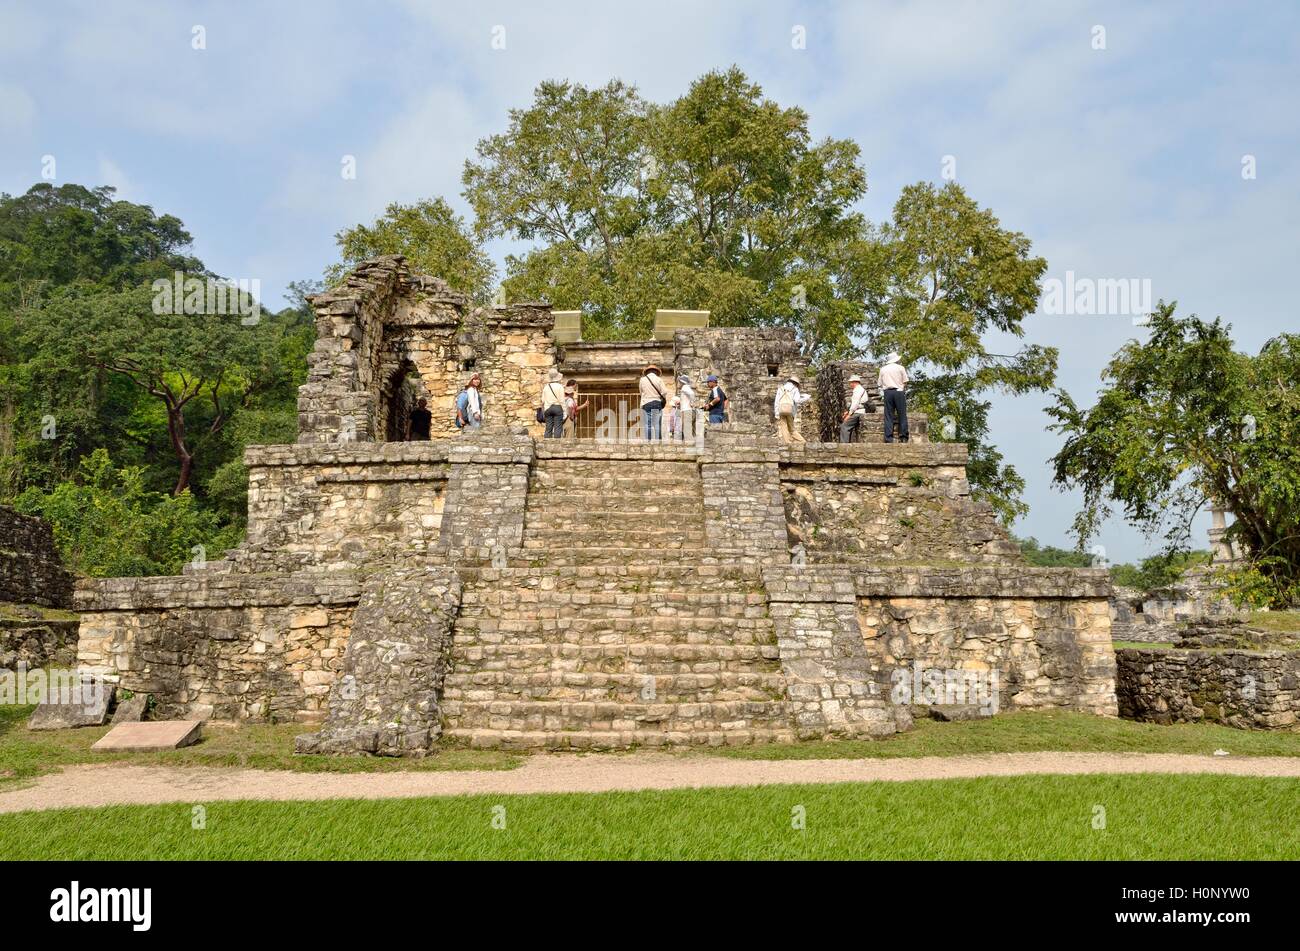 Tourist group on Templo XIV, Mayan ruins of Palenque, Chiapas, Mexico Stock Photo